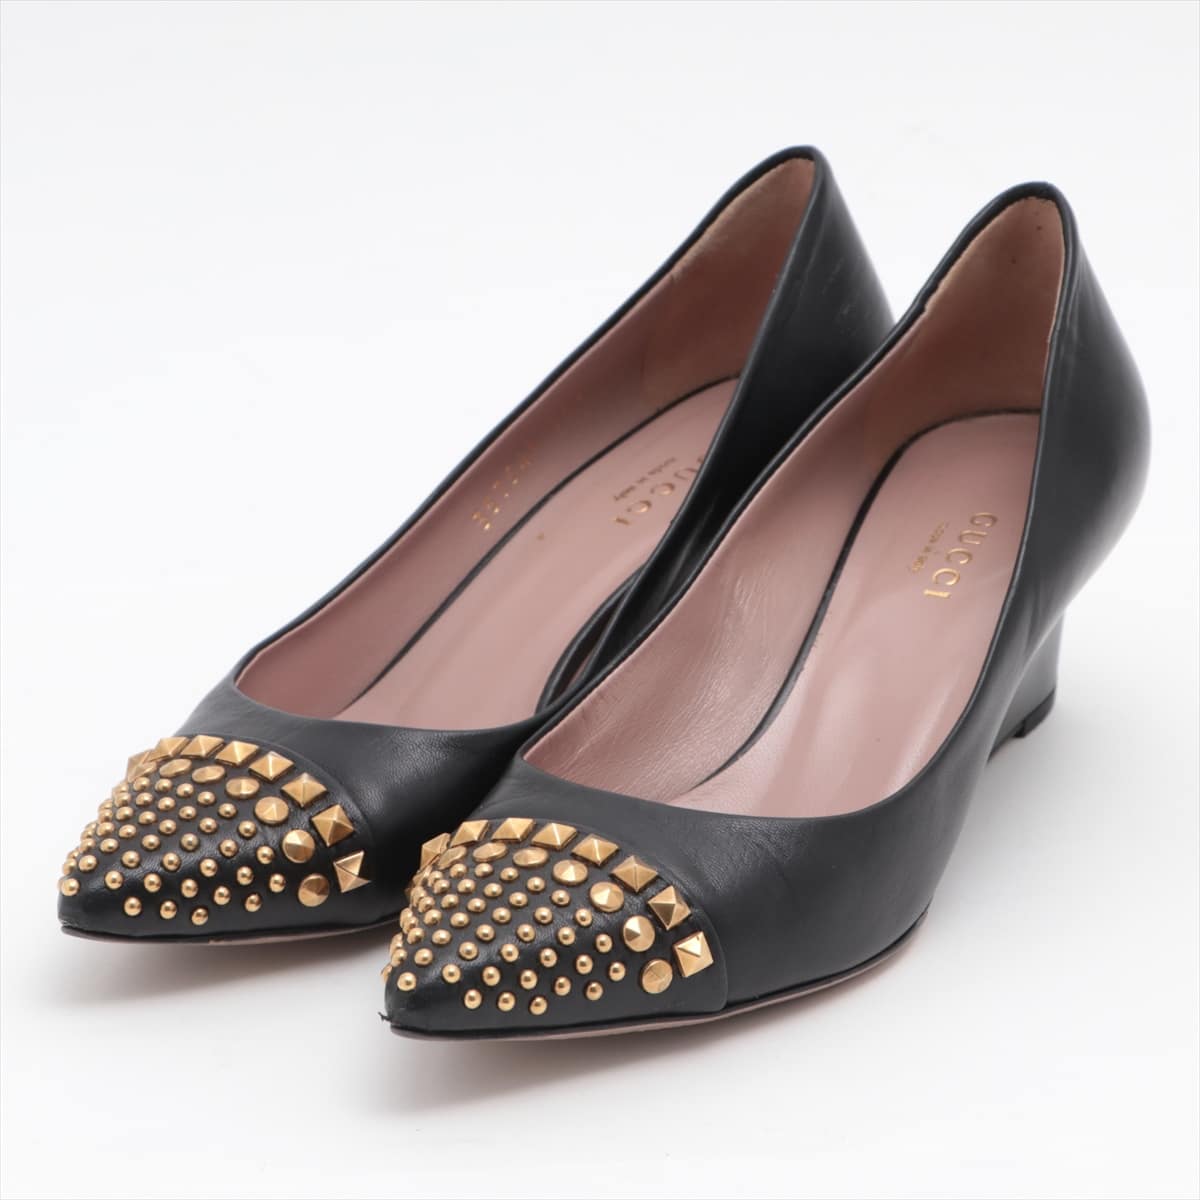 Gucci Leather Pumps 36 1/2 Ladies' Black Studs 357549 Wedge soles